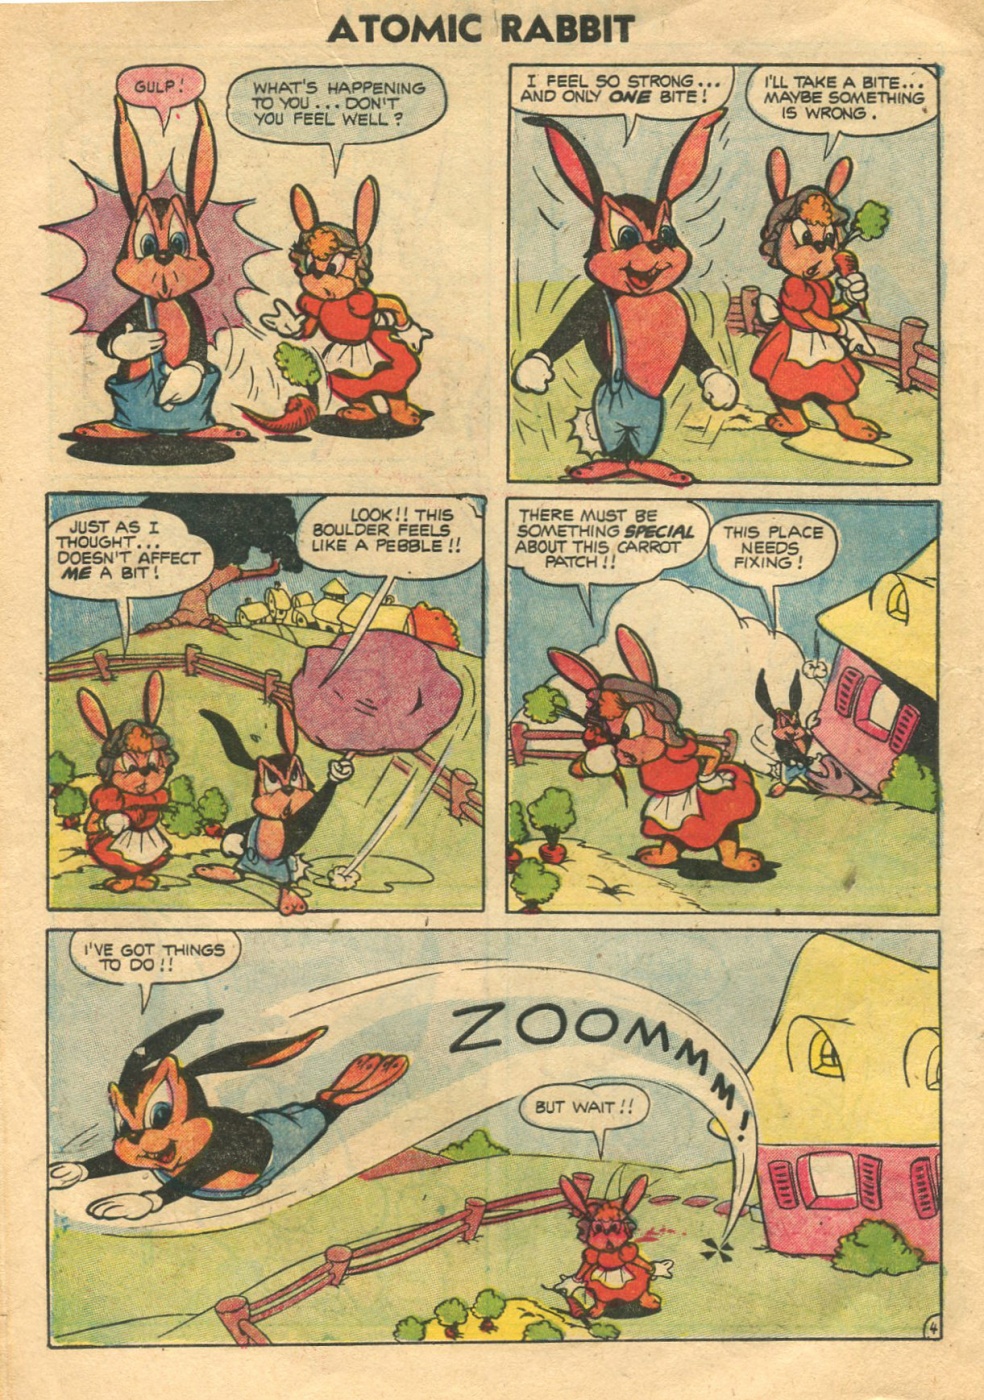 Atomic Rabbit Comics (6)